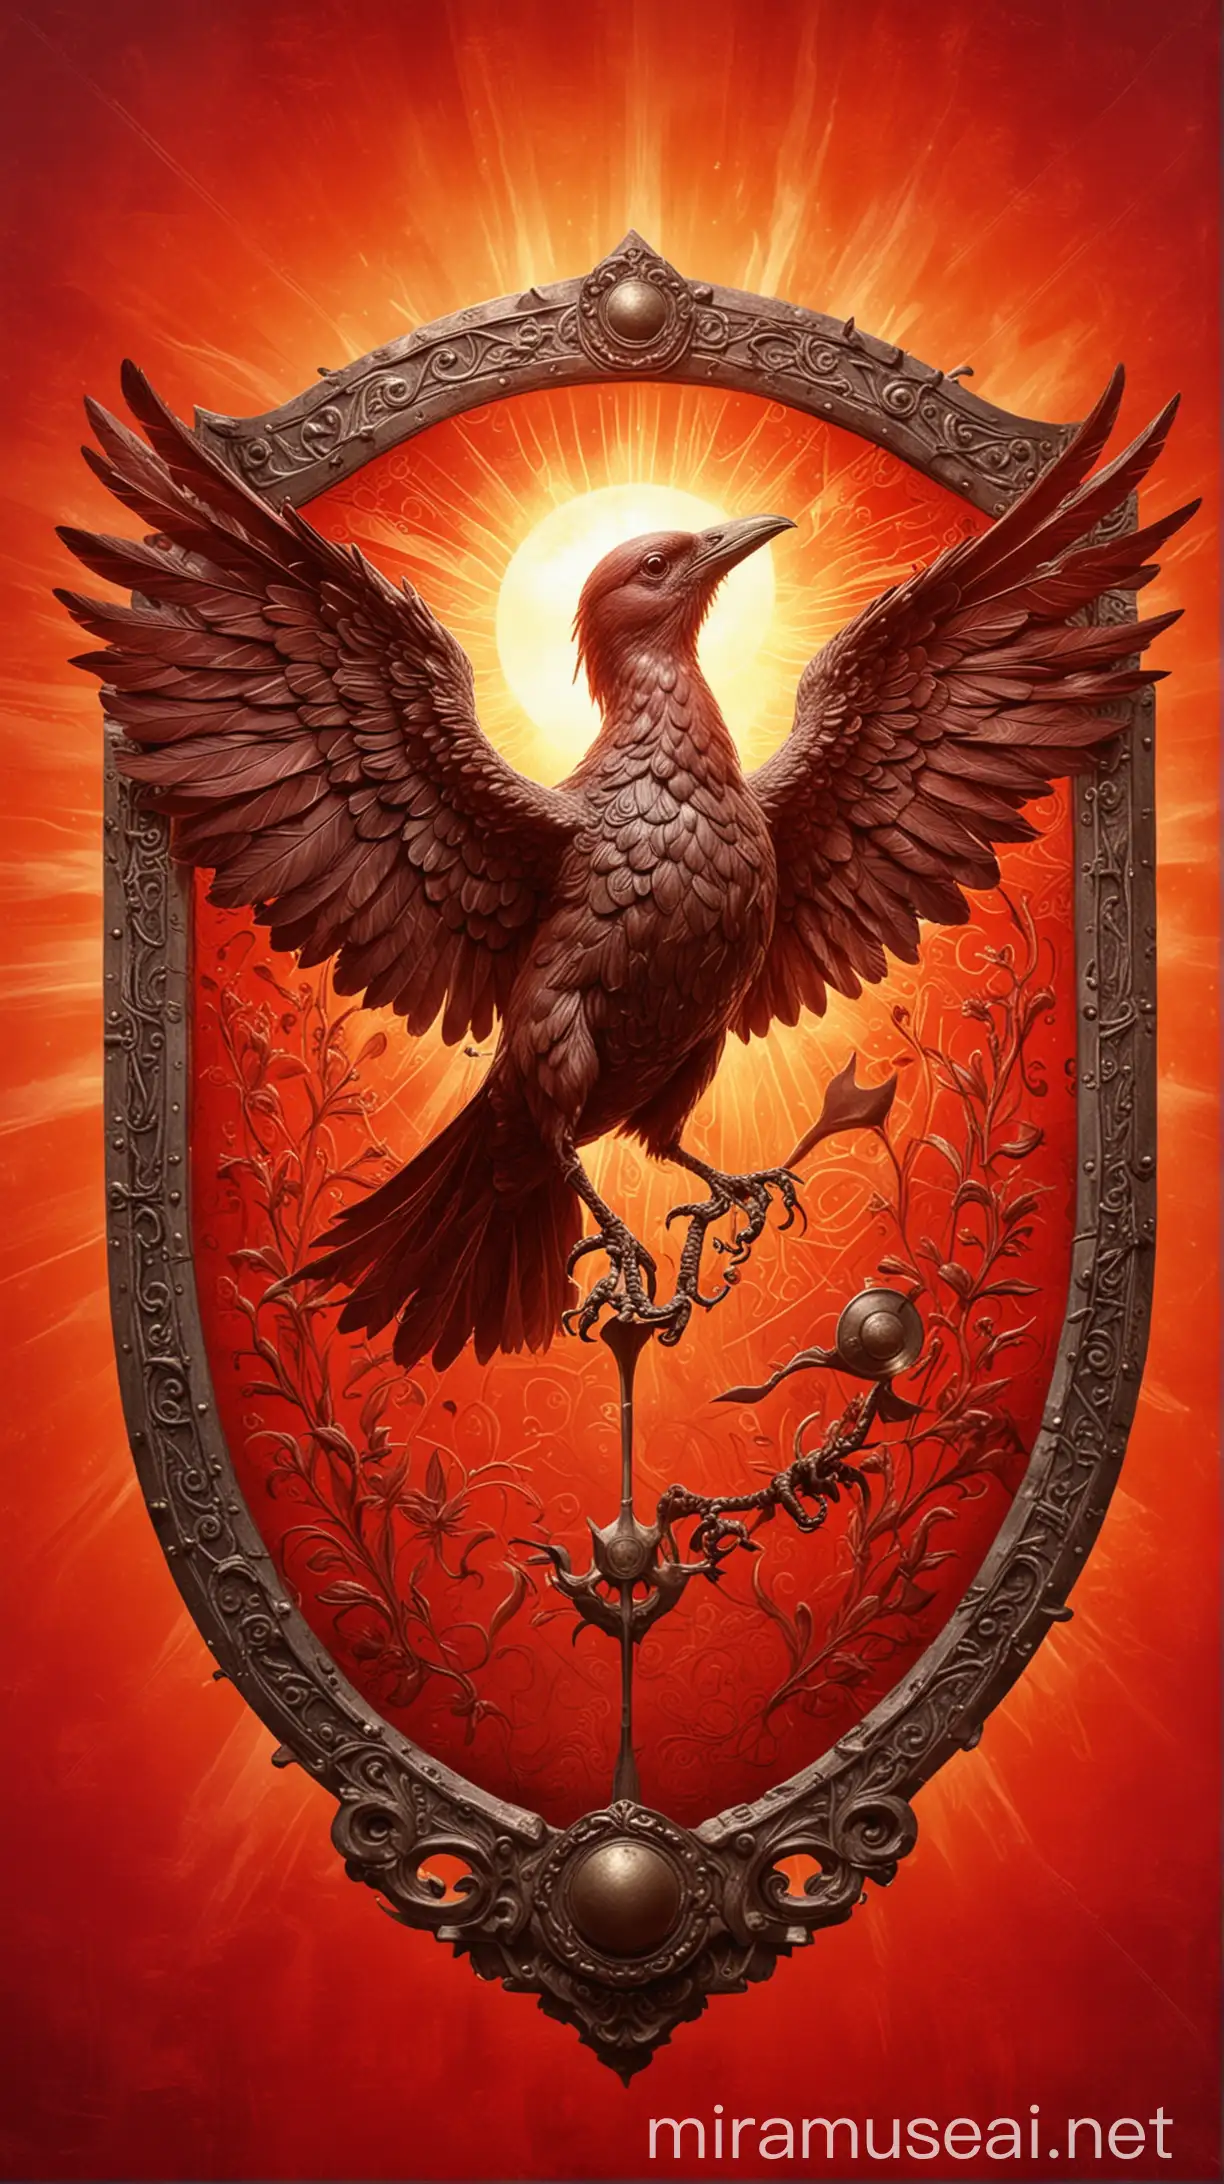 Mystical Bird Shield Against Scarlet Sun Background